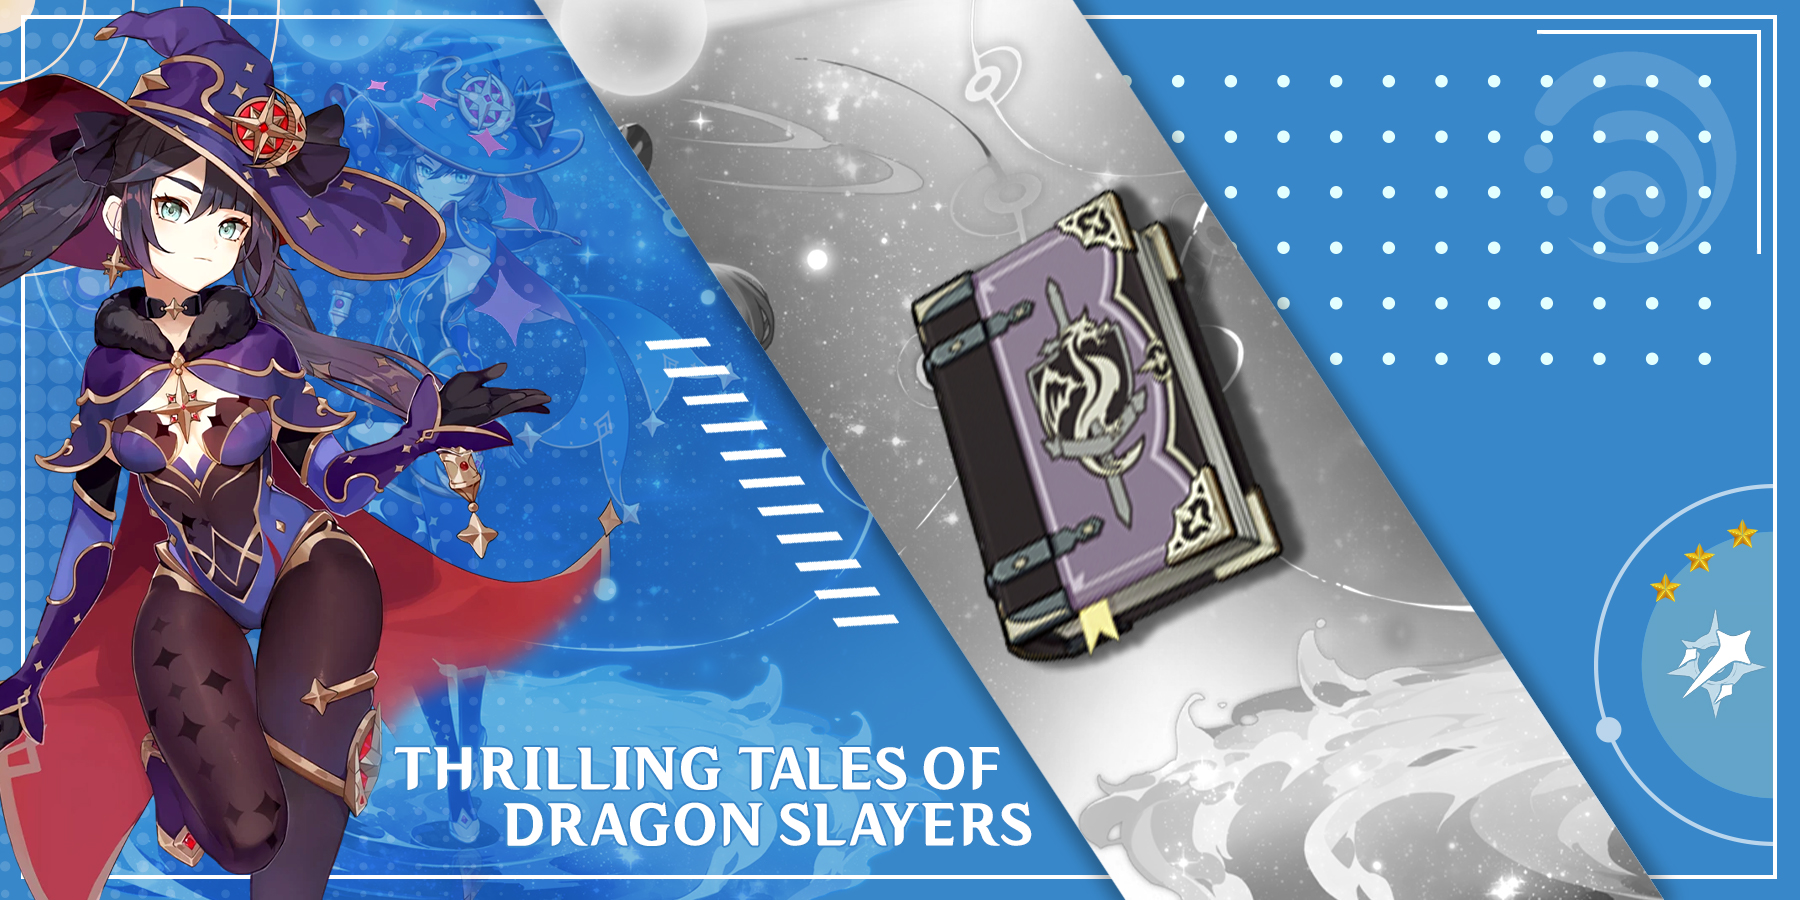 mona-using-thrilling-tales-of-dragon-slayers-in-genshin-impact